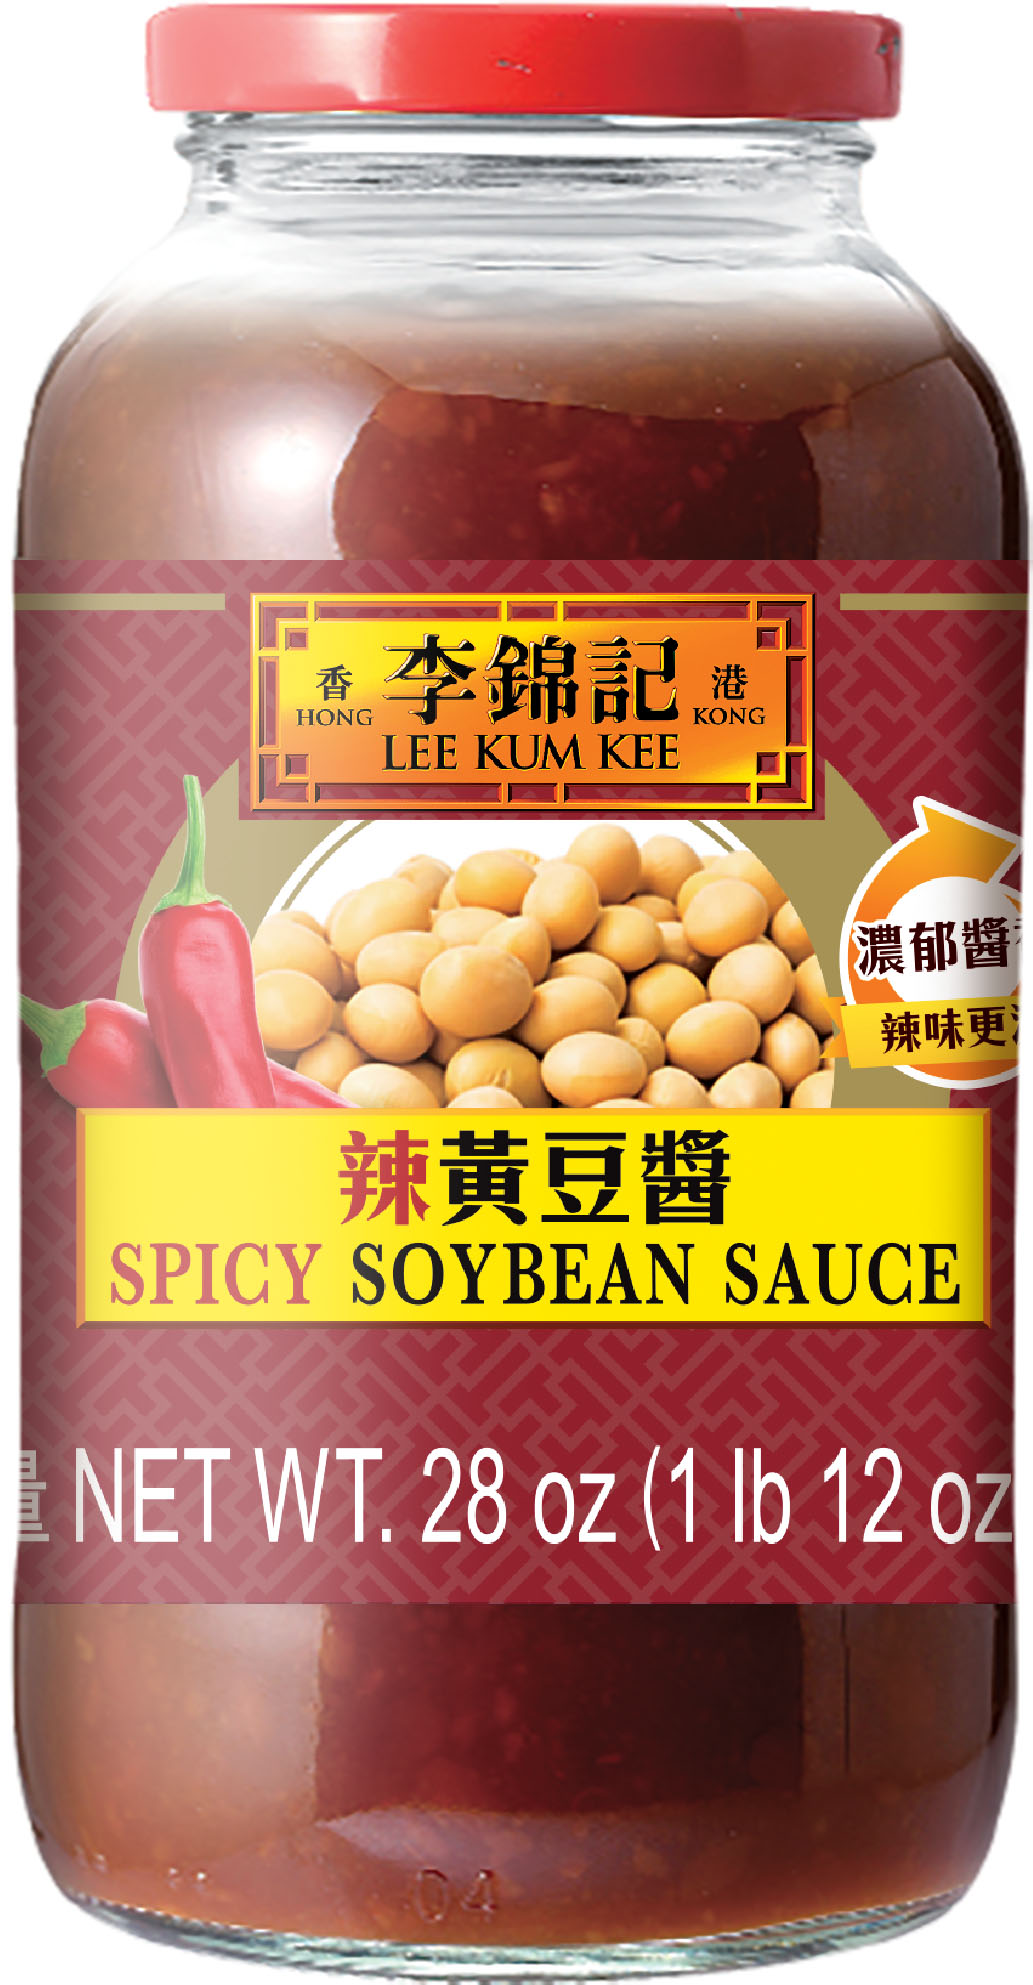 Spicy Soybean Sauce 28 oz (1 lb 12 oz) 800 g, Jar